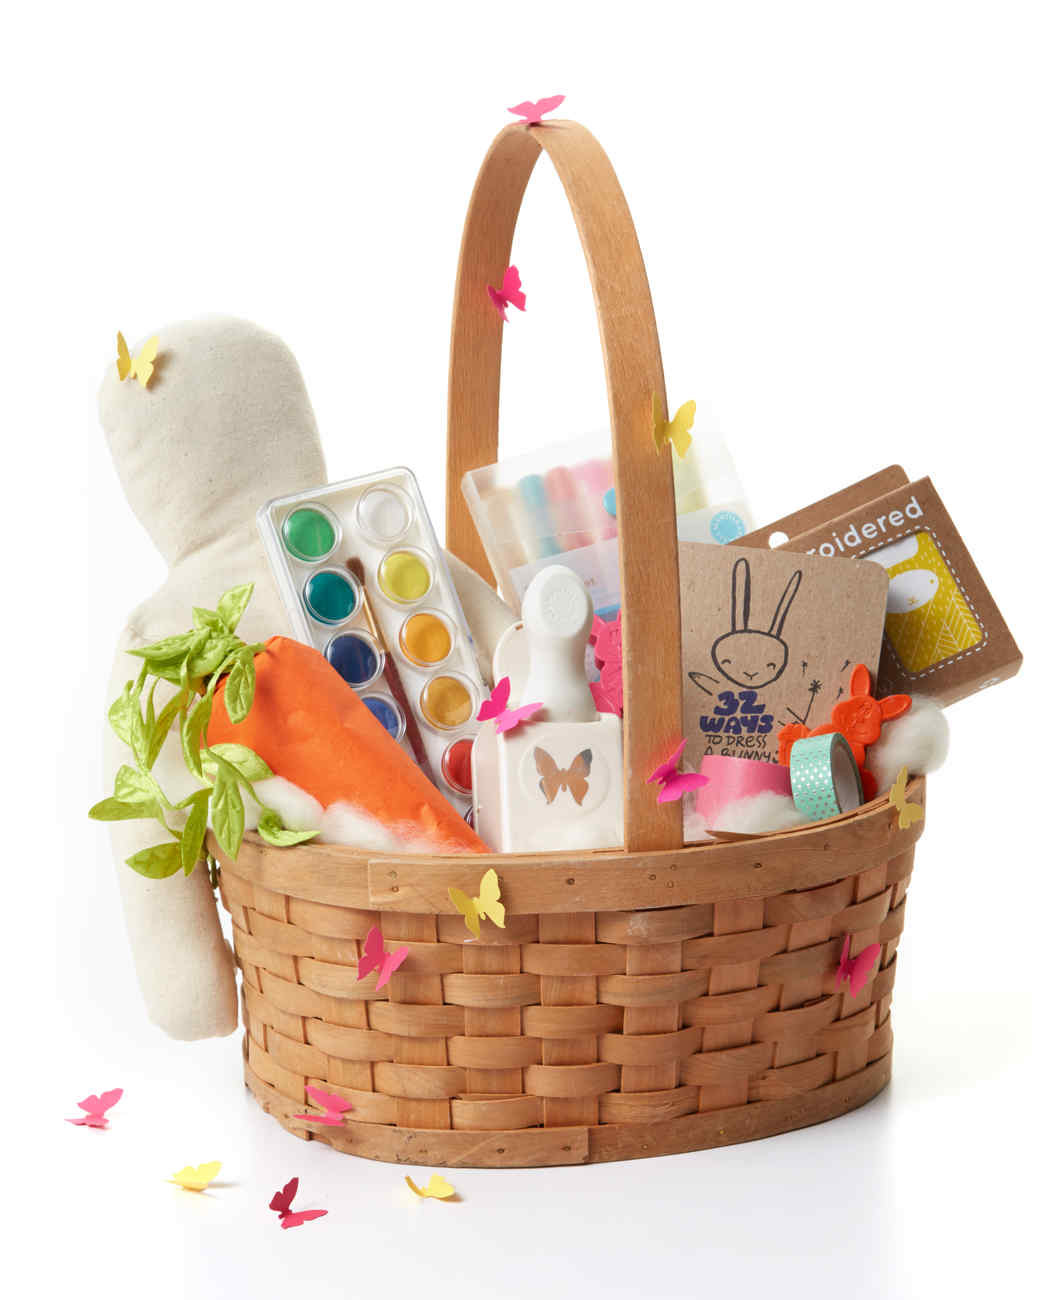 Best Easter Basket Ideas
 21 of Our Best Easter Basket Ideas